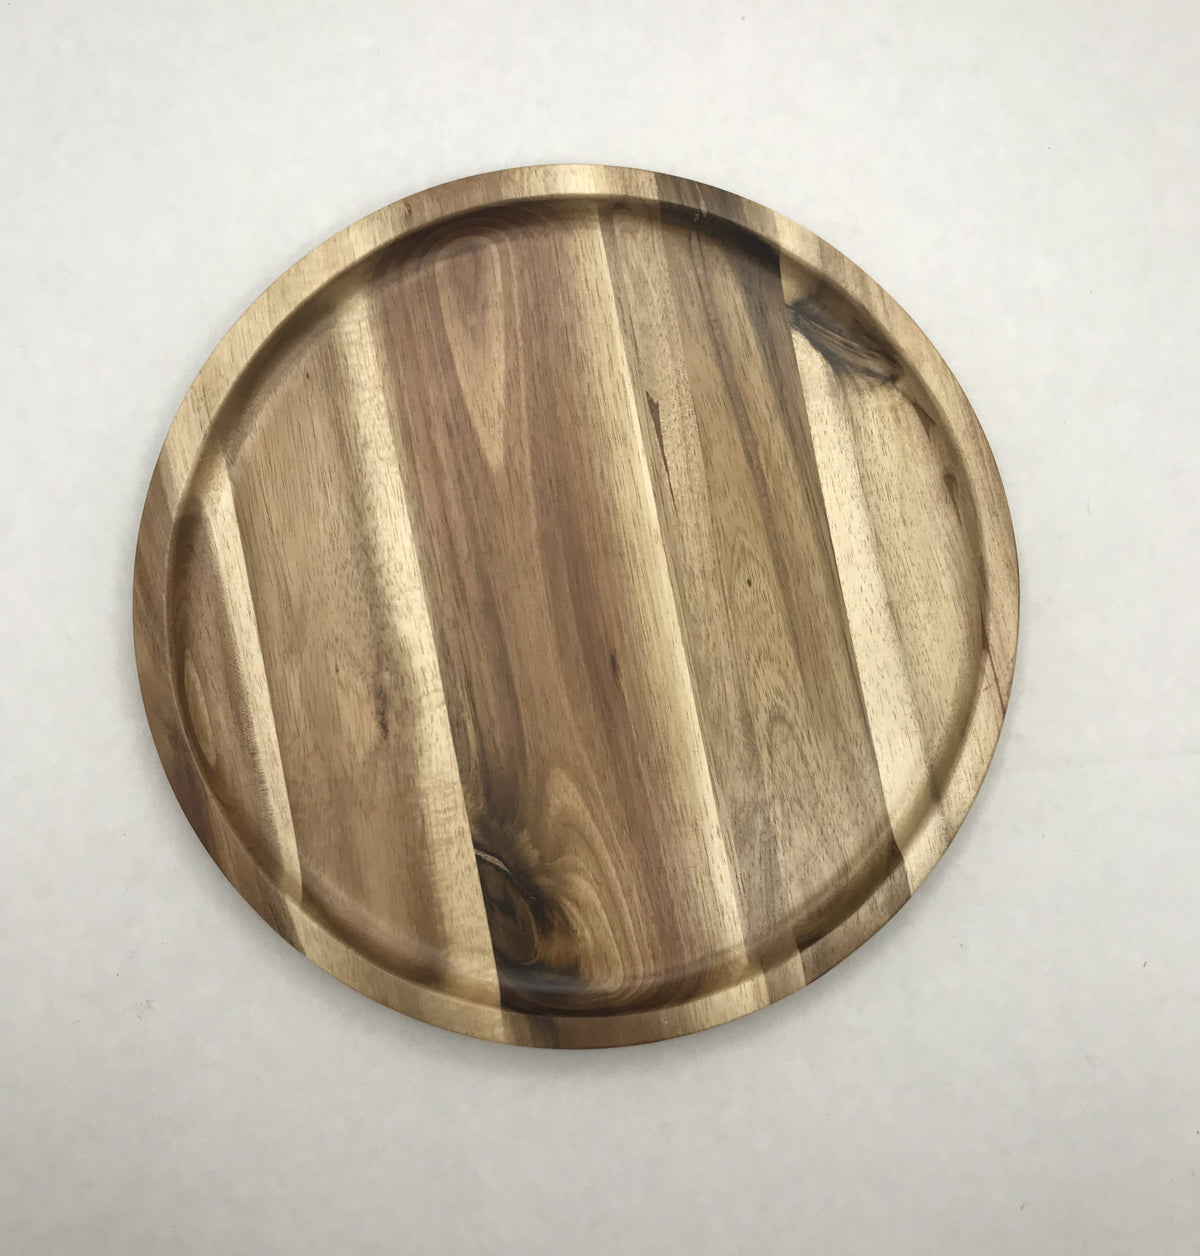 ZavisGreen Acacia round Plate / Platter 10" Diameter SKU: ZG-660010